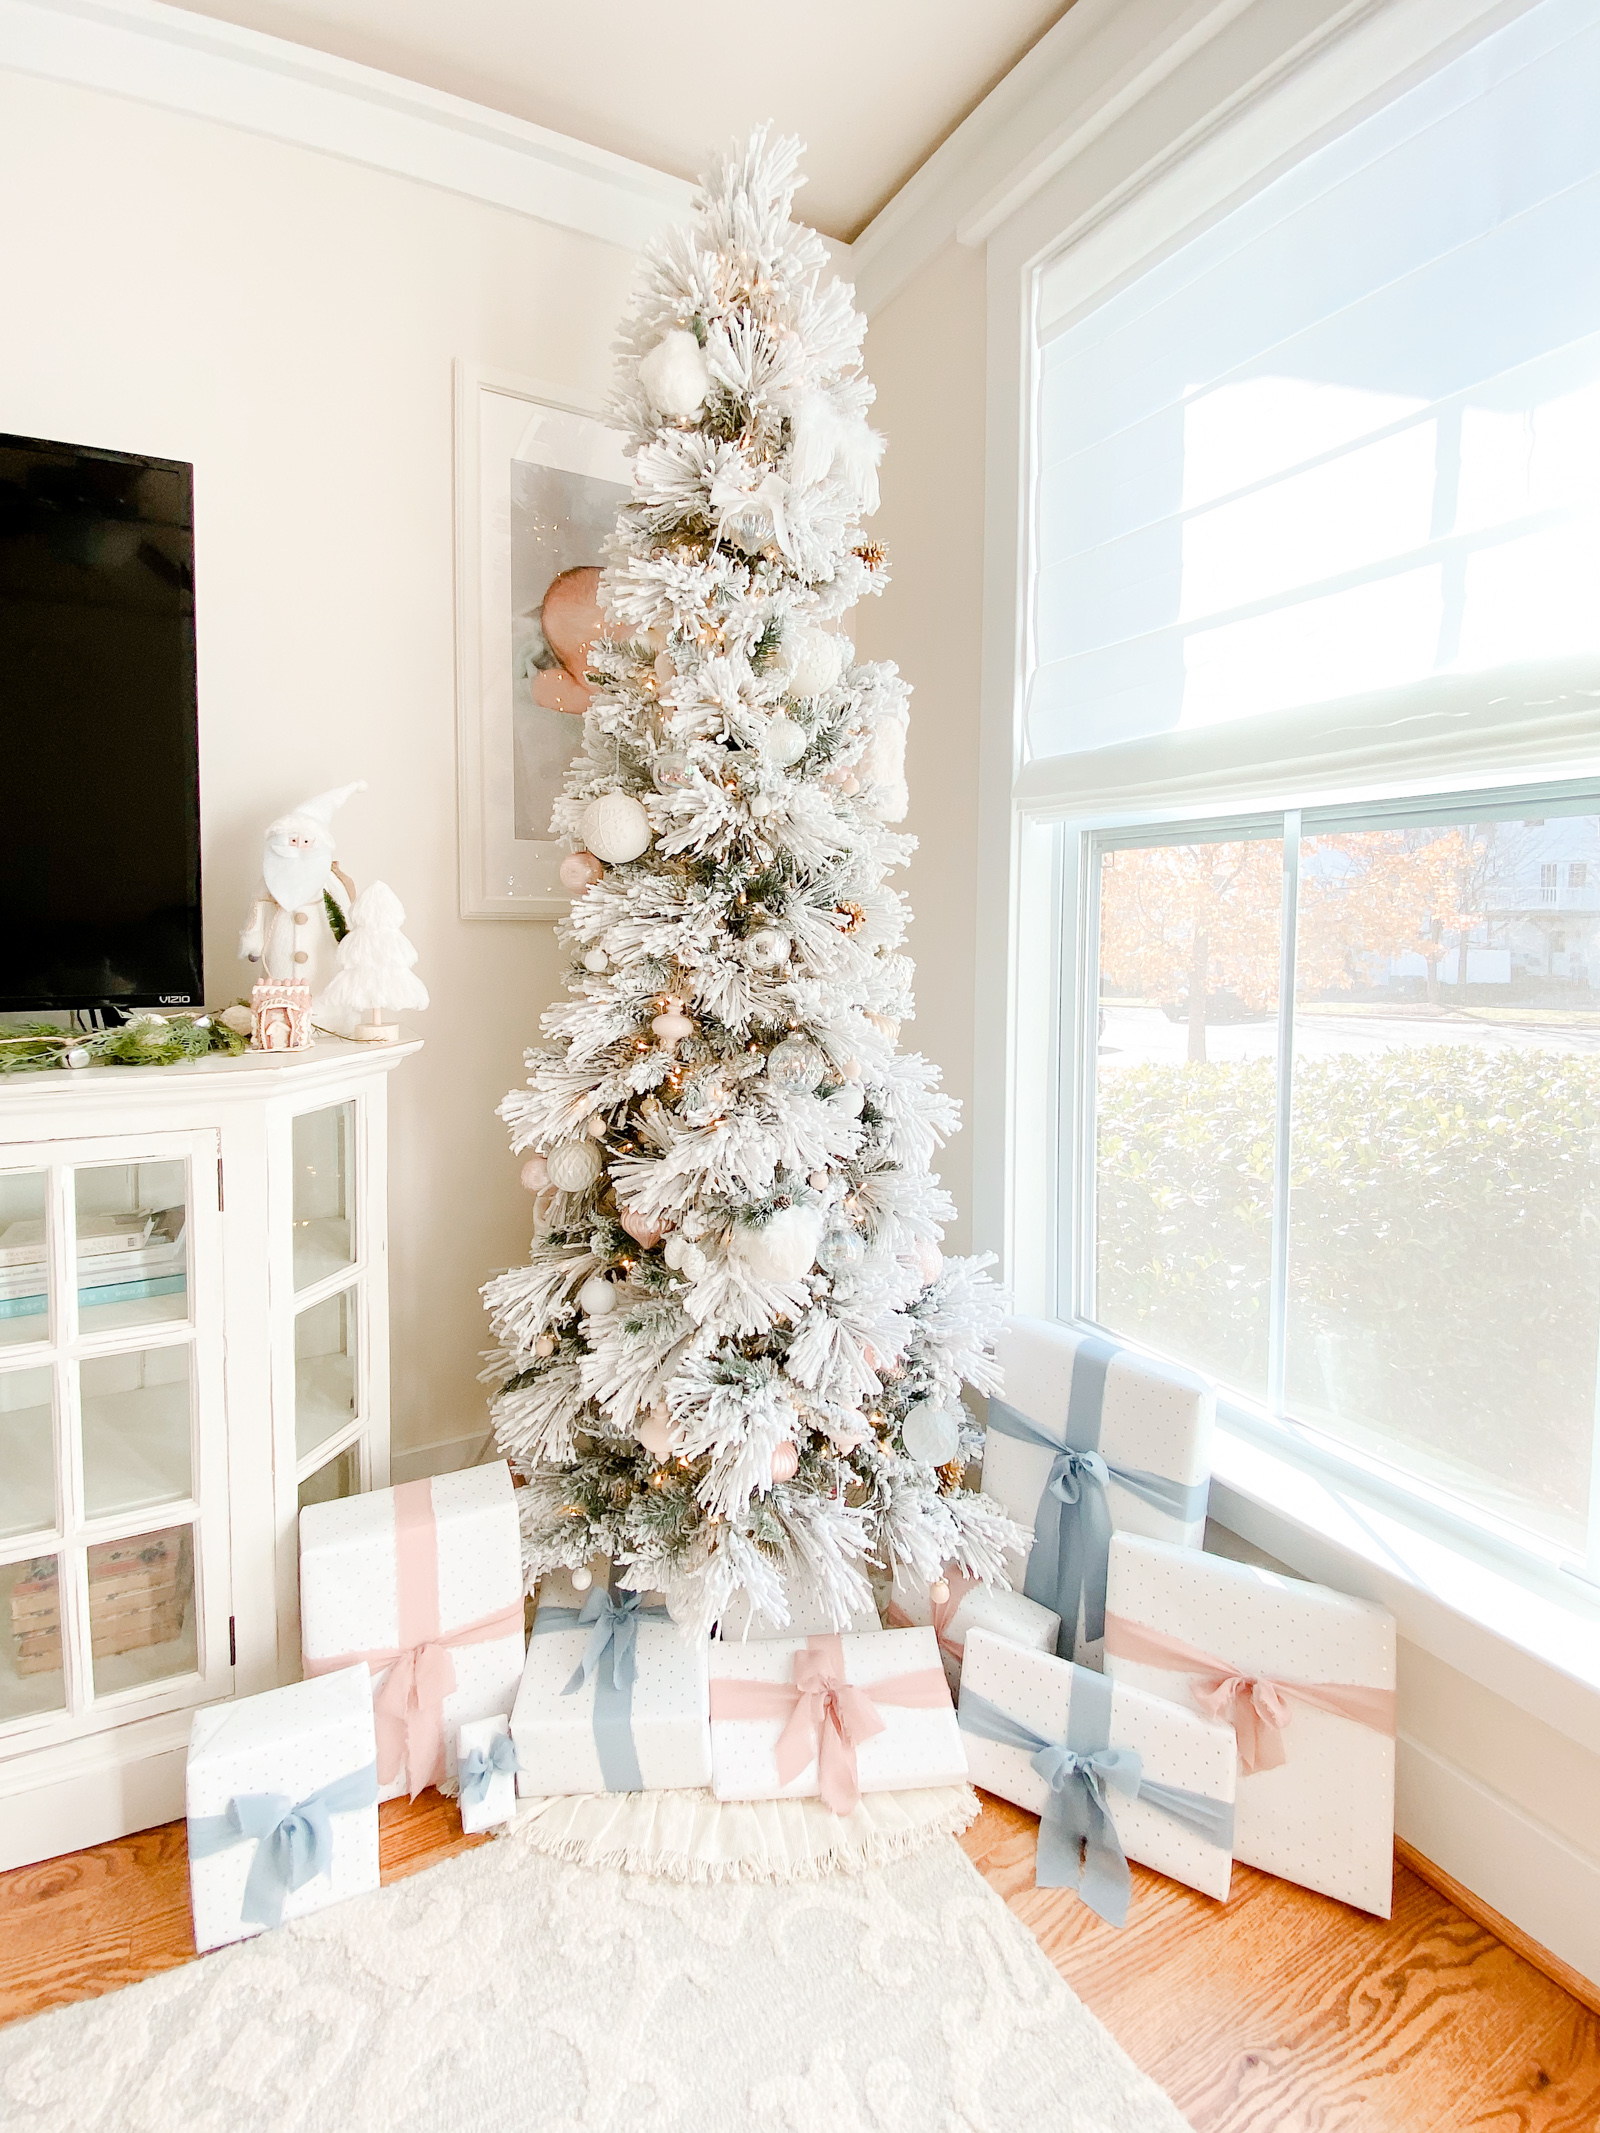 flocked Christmas tree, white Christmas tree, snow, Christmas decor, white tree with ornaments, Christmas presents